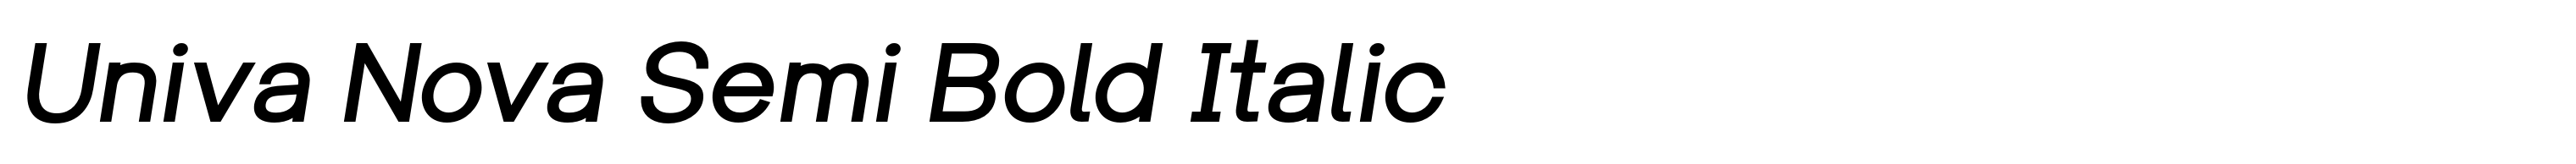 Univa Nova Semi Bold Italic